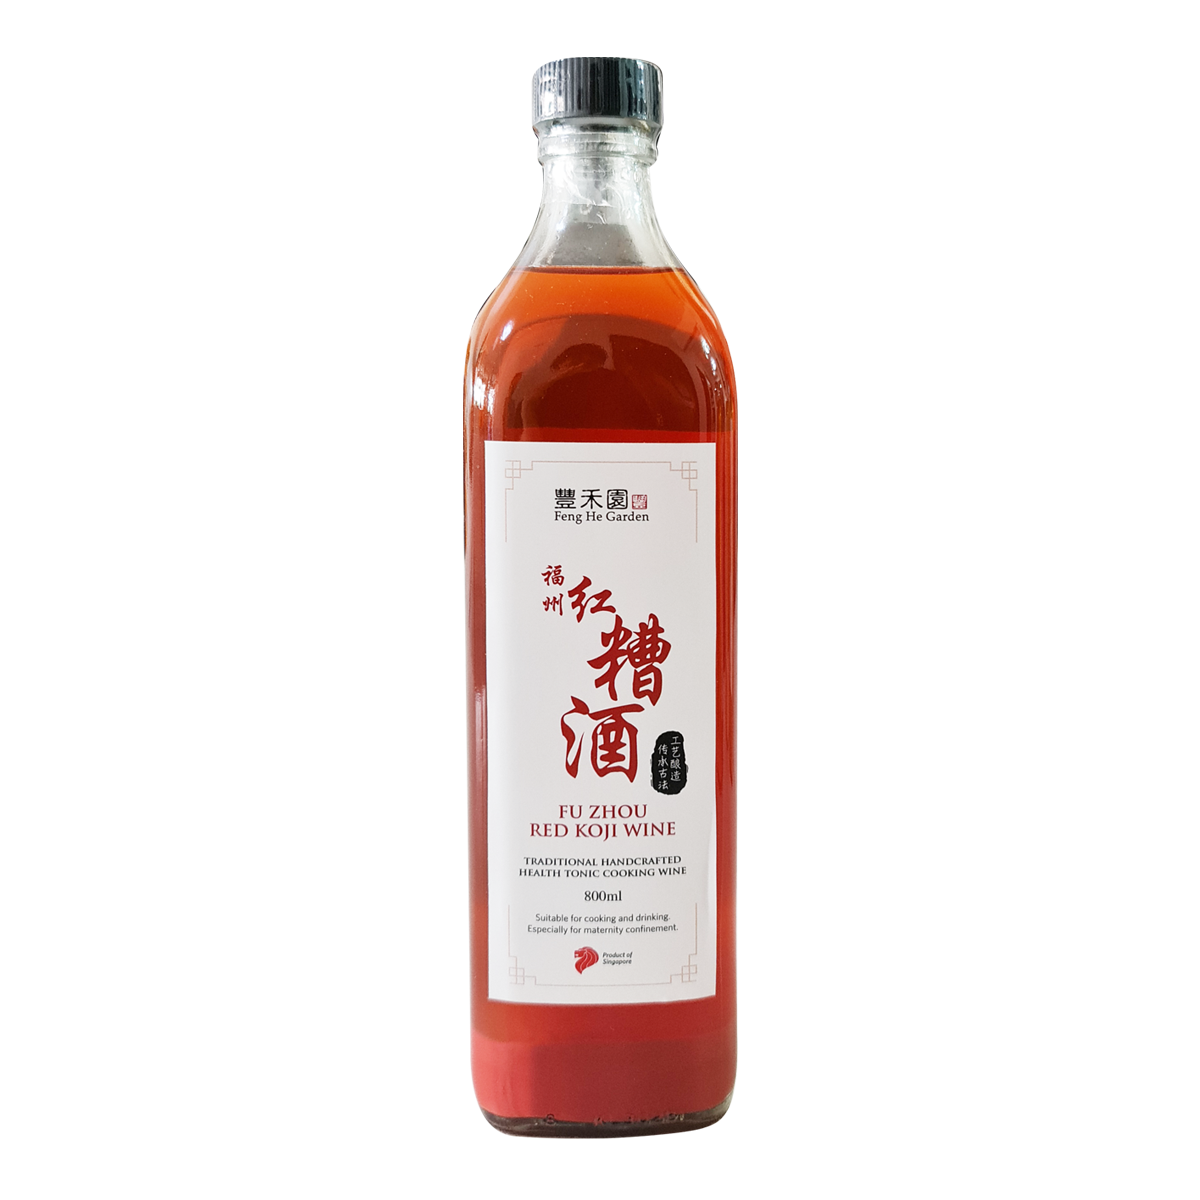 Fu Zhou Red Koji Wine